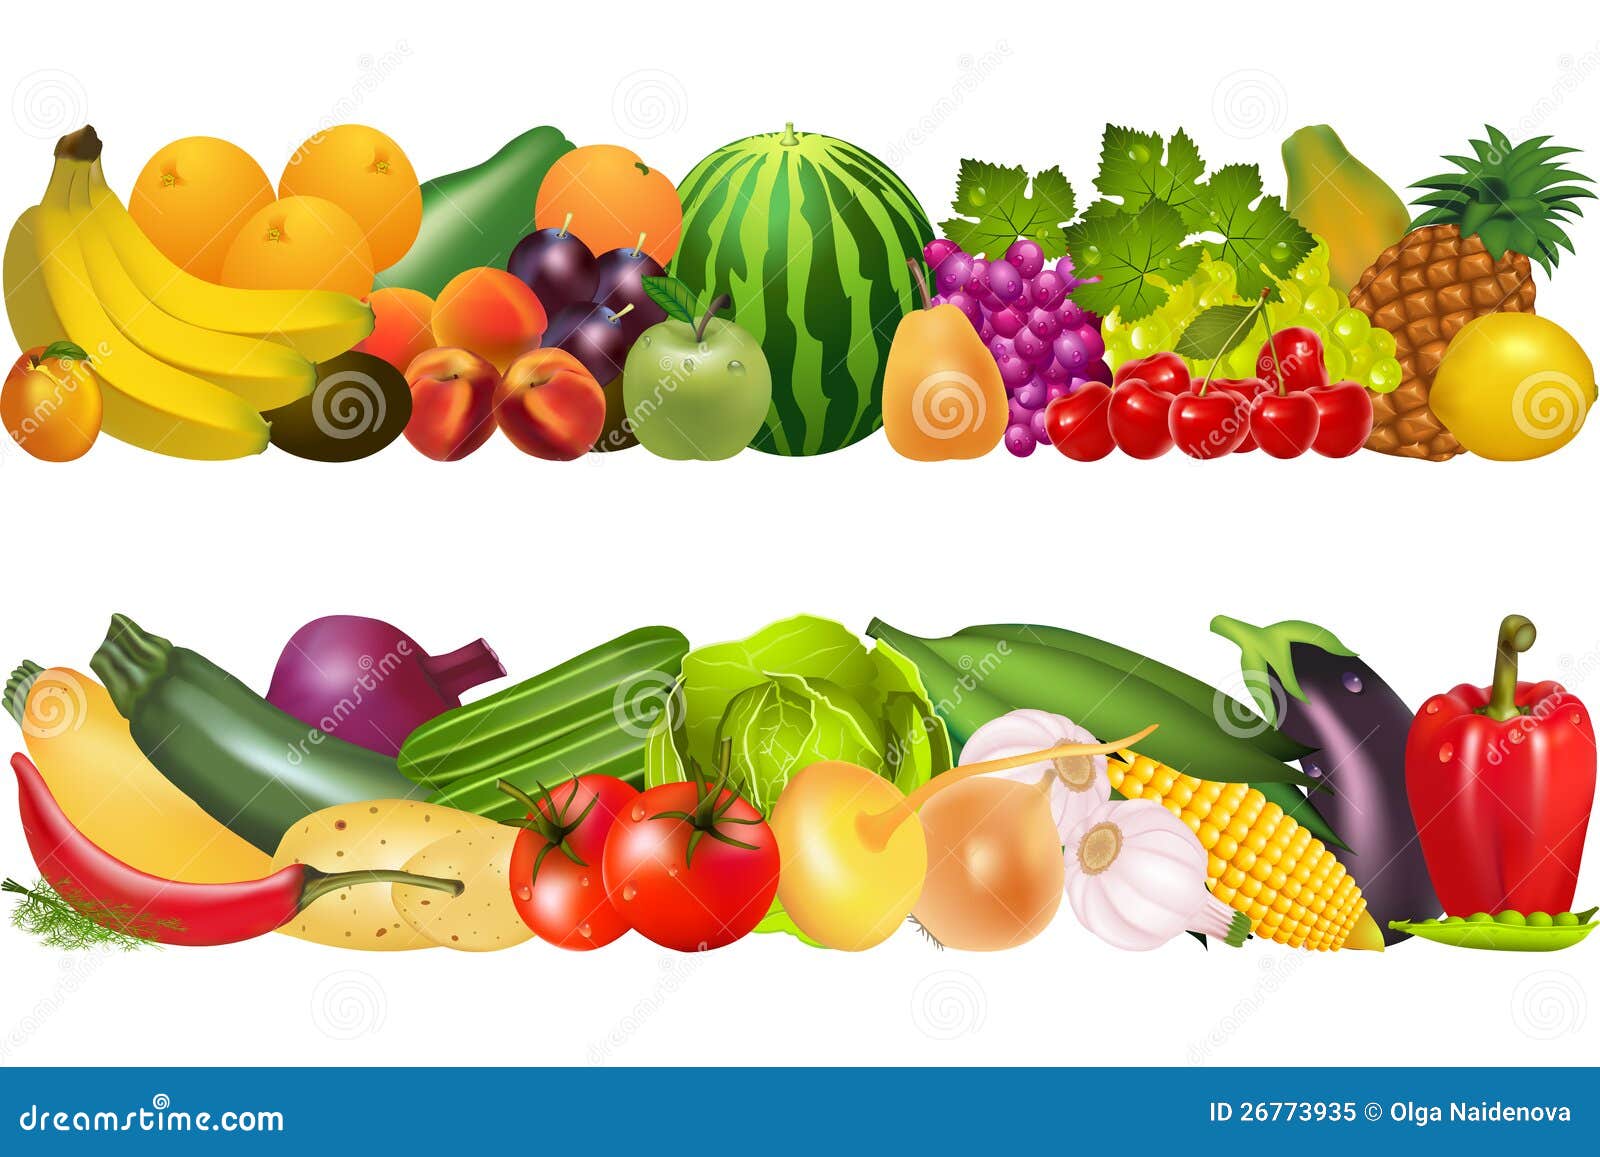 Two Still Life Food Vegetables And Fruits Illustration 26773935 Megapixl